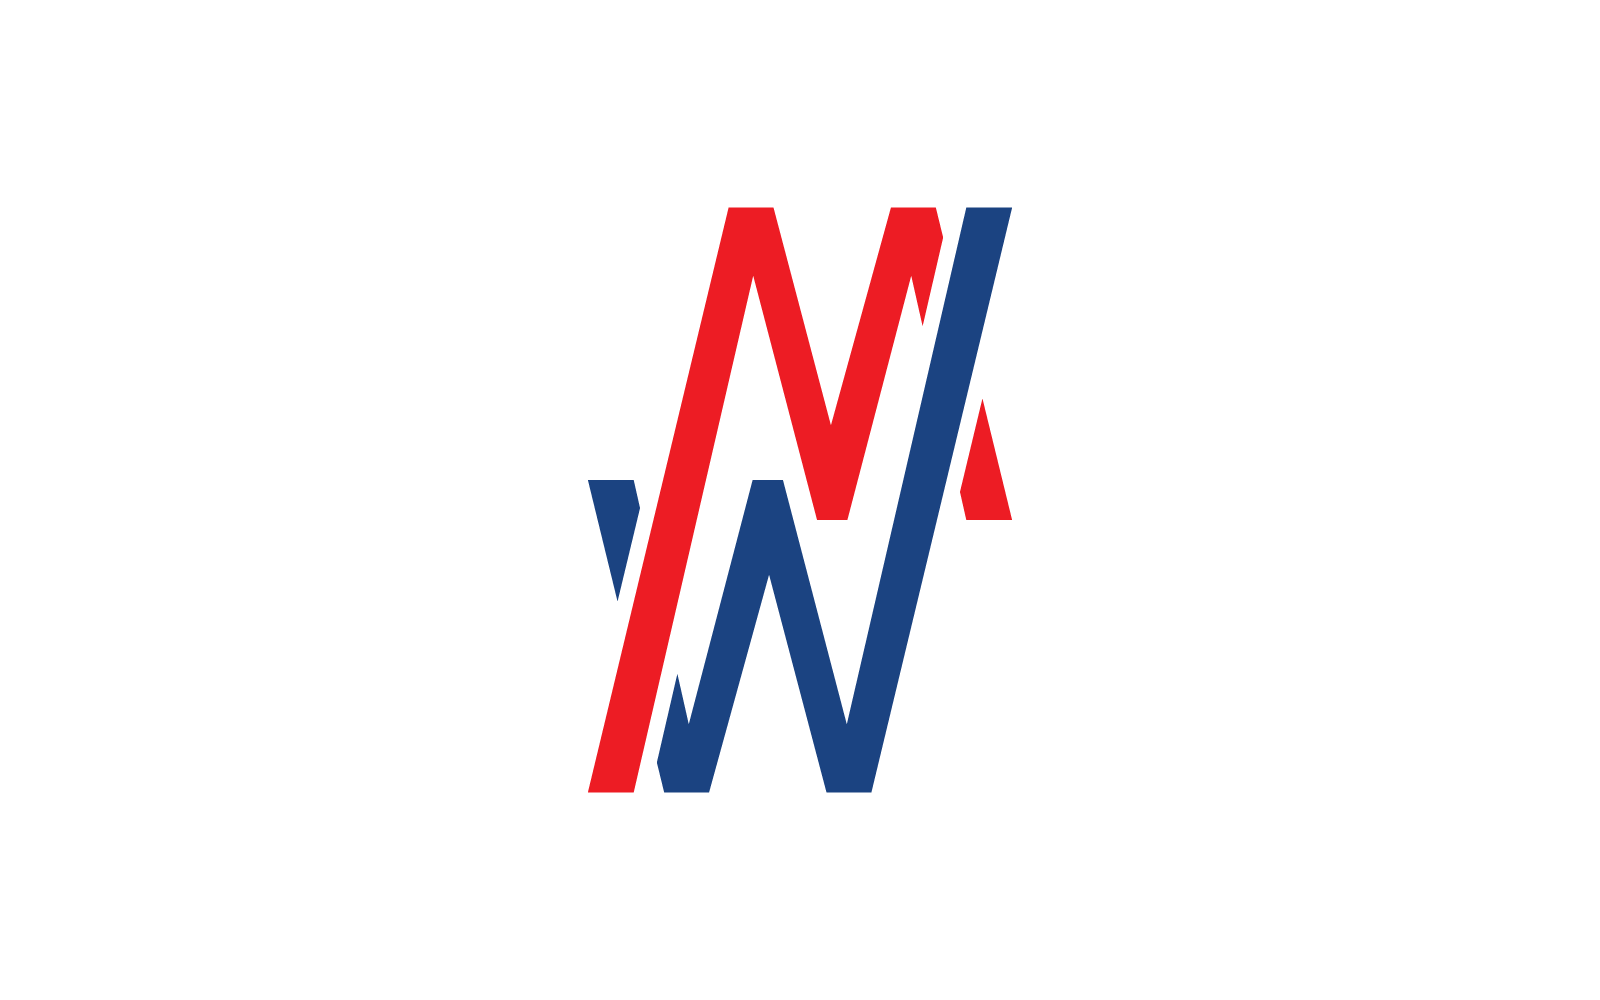 Modern M,W or N Initial letter alphabet font logo vector design